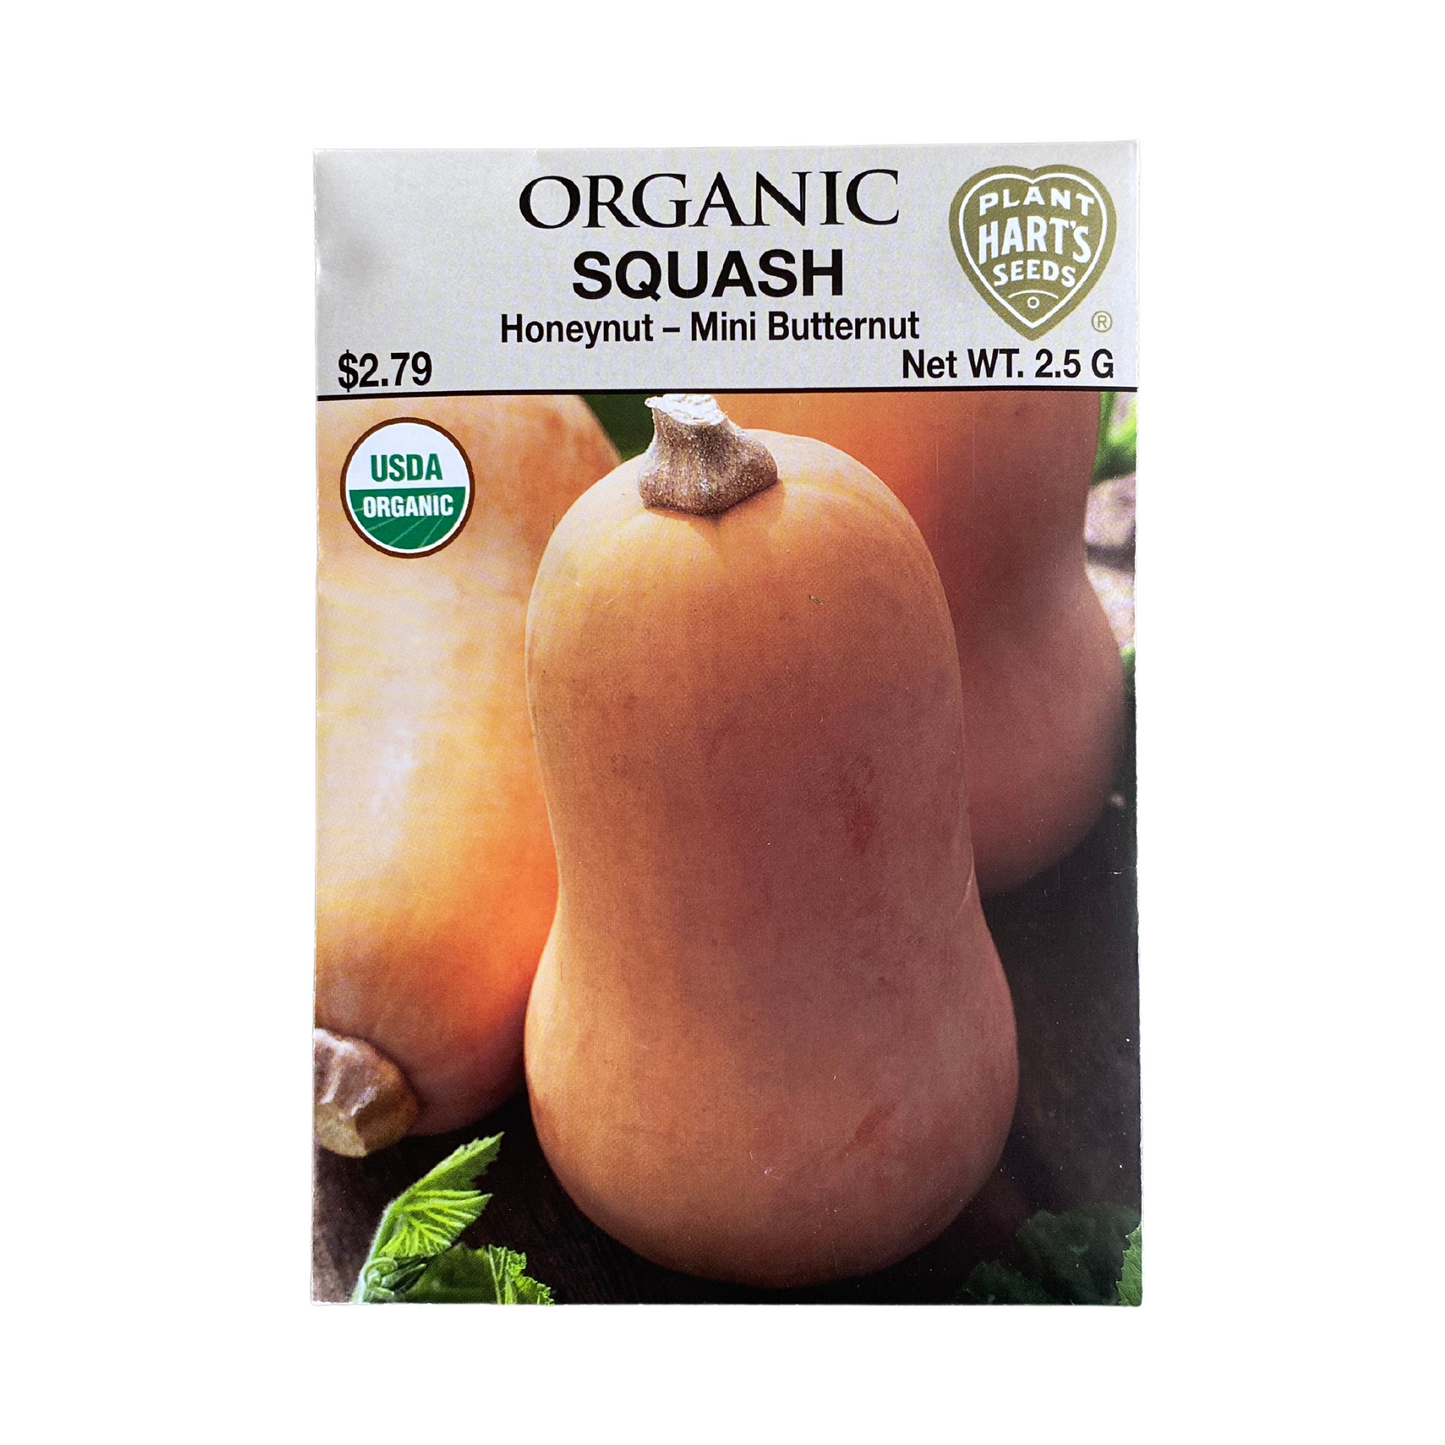 Organic Squash Honeynut (Baby Butternut)